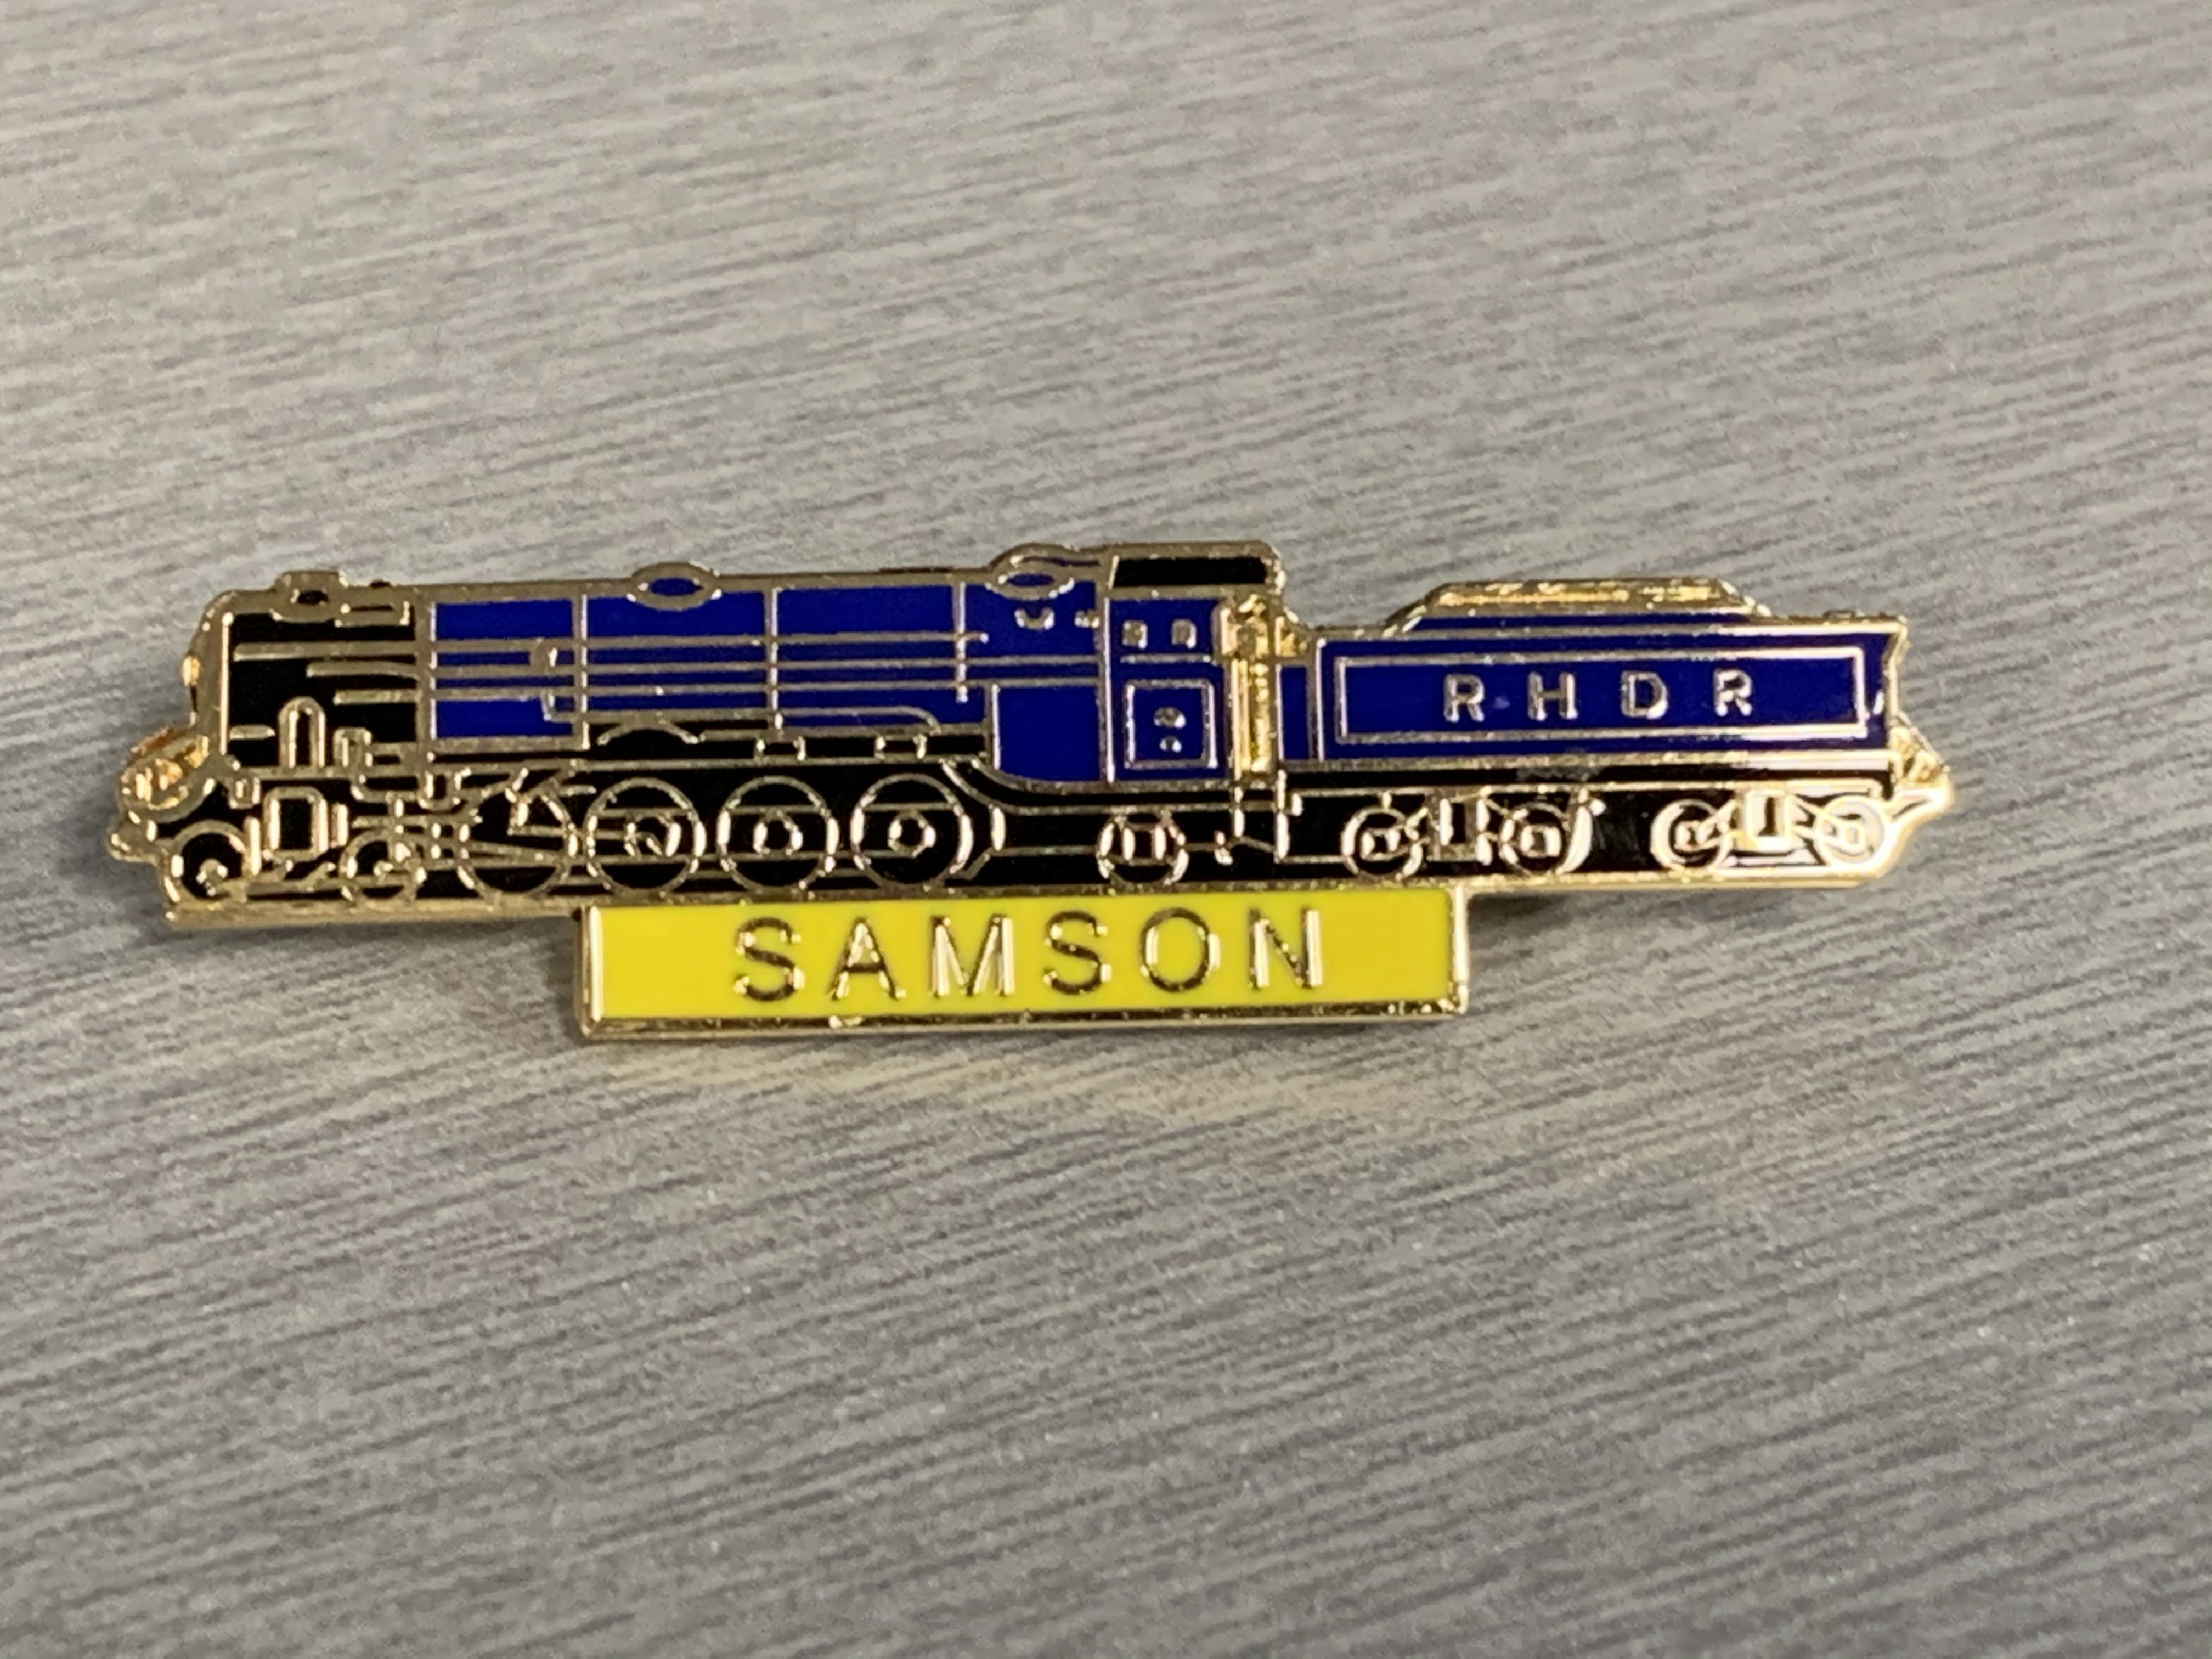 Samson Locomotive Badge